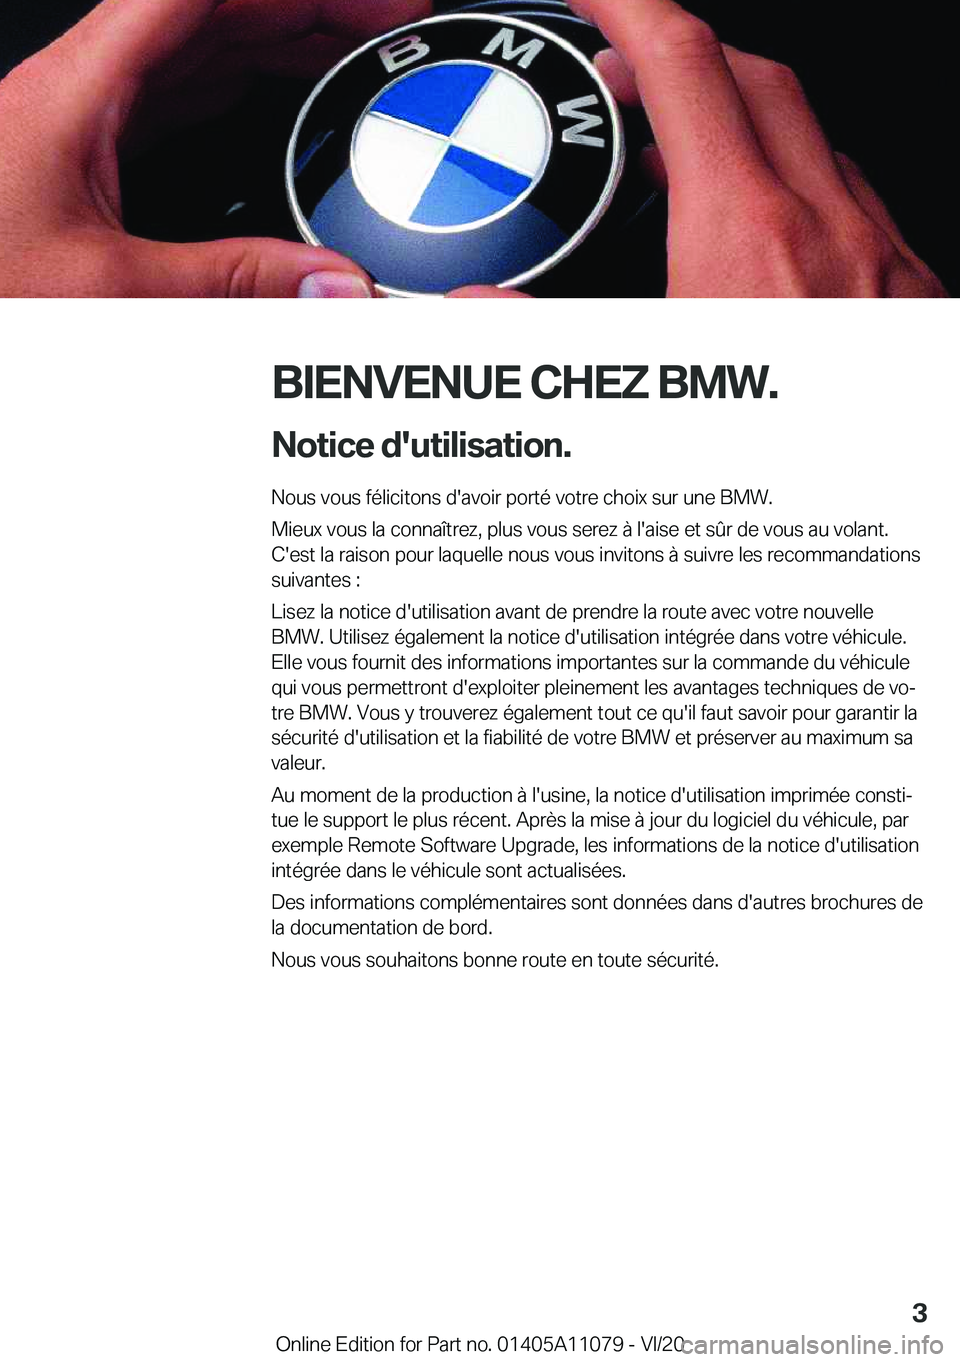 BMW 7 SERIES 2021  Notices Demploi (in French) �B�I�E�N�V�E�N�U�E��C�H�E�Z��B�M�W�.�N�o�t�i�c�e��d�'�u�t�i�l�i�s�a�t�i�o�n�.
�N�o�u�s��v�o�u�s��f�é�l�i�c�i�t�o�n�s��d�'�a�v�o�i�r��p�o�r�t�é��v�o�t�r�e��c�h�o�i�x��s�u�r��u�n�e�